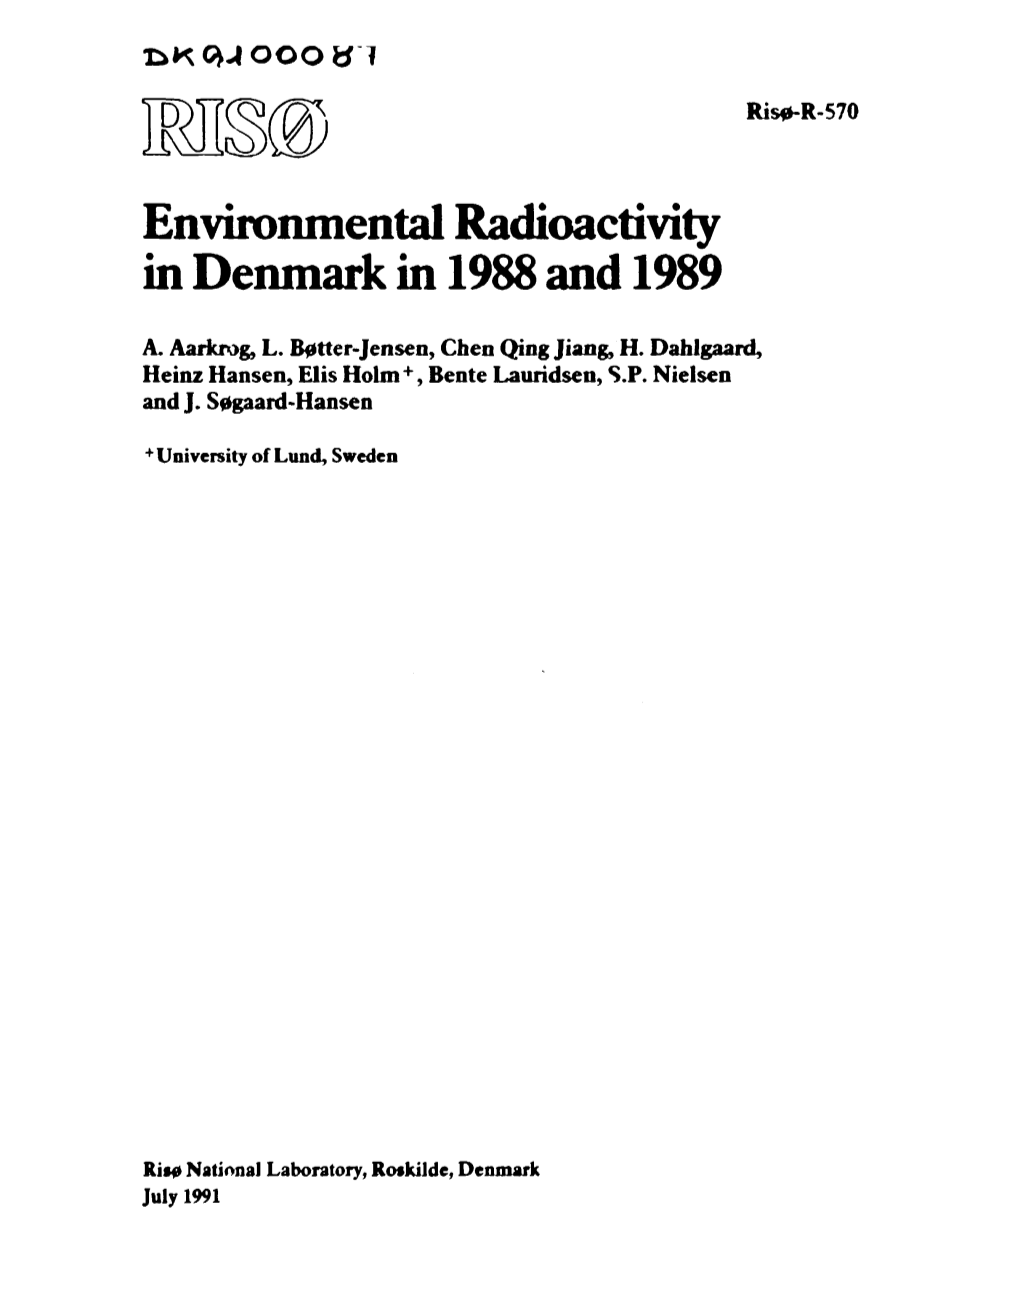 Environmental Radioactivity in Denmark in 1988 and 1989